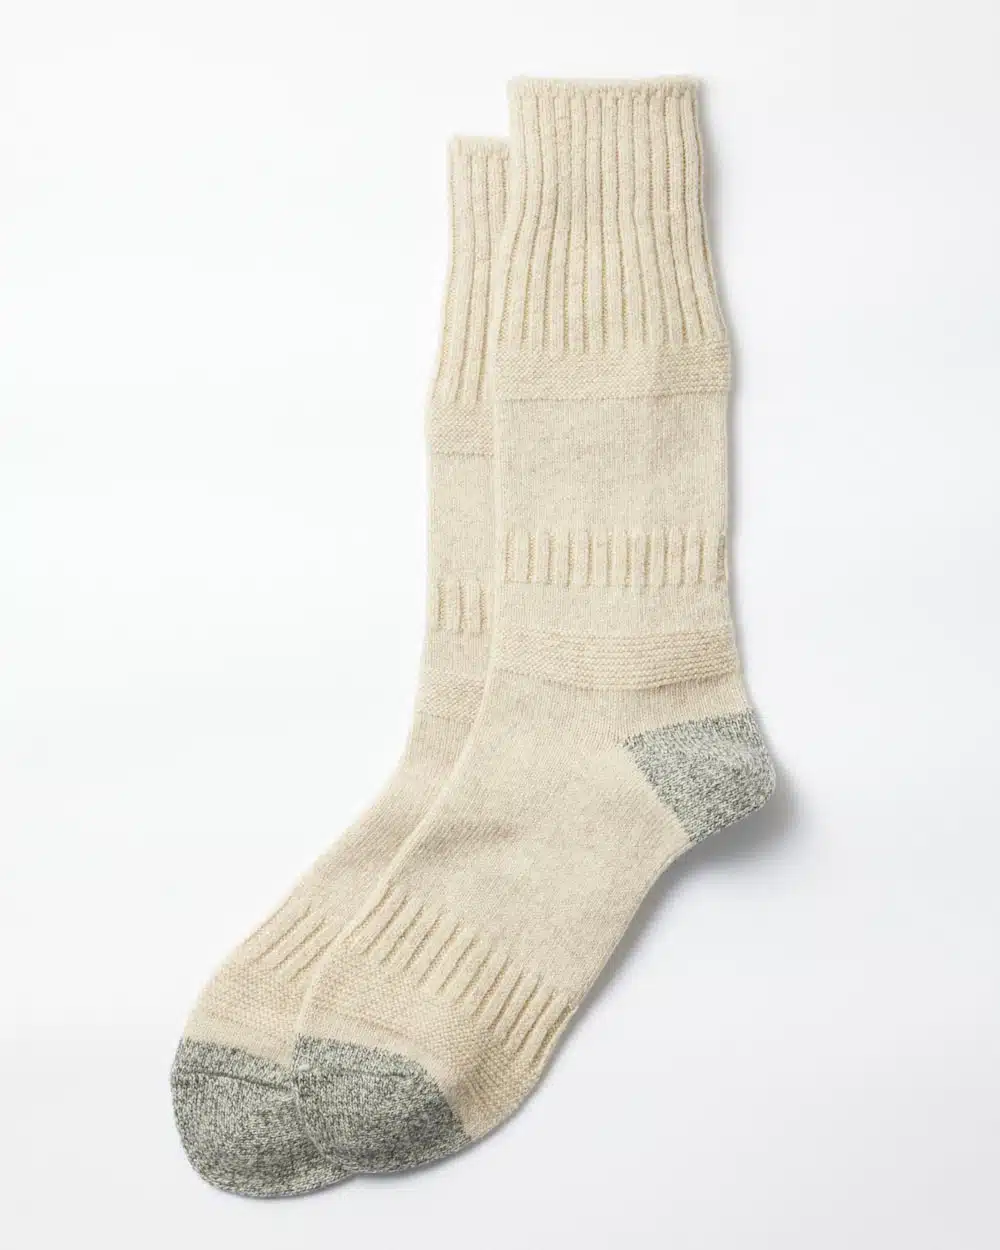 RoToTo Guernsey Pattern Crew Socks - Light Beige/Grey